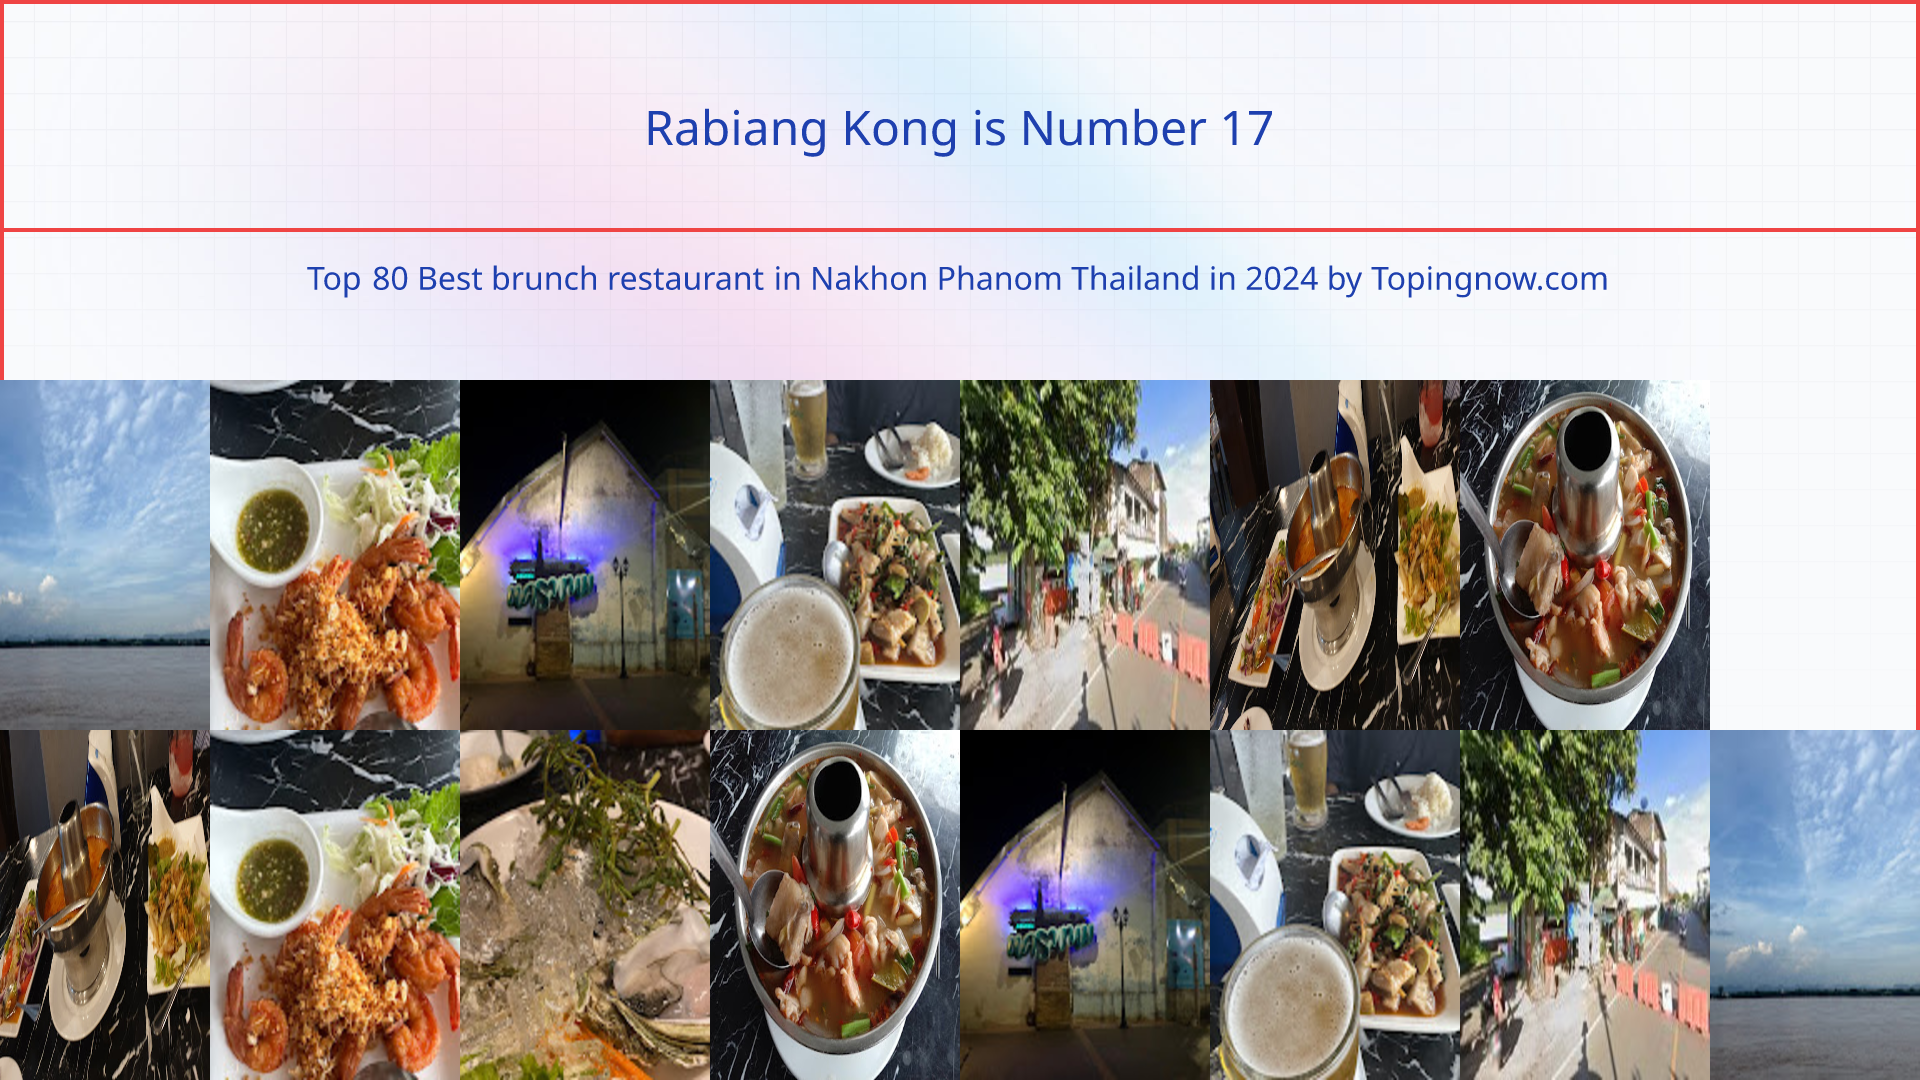 Rabiang Kong: Top 80 Best brunch restaurant in Nakhon Phanom Thailand in 2024